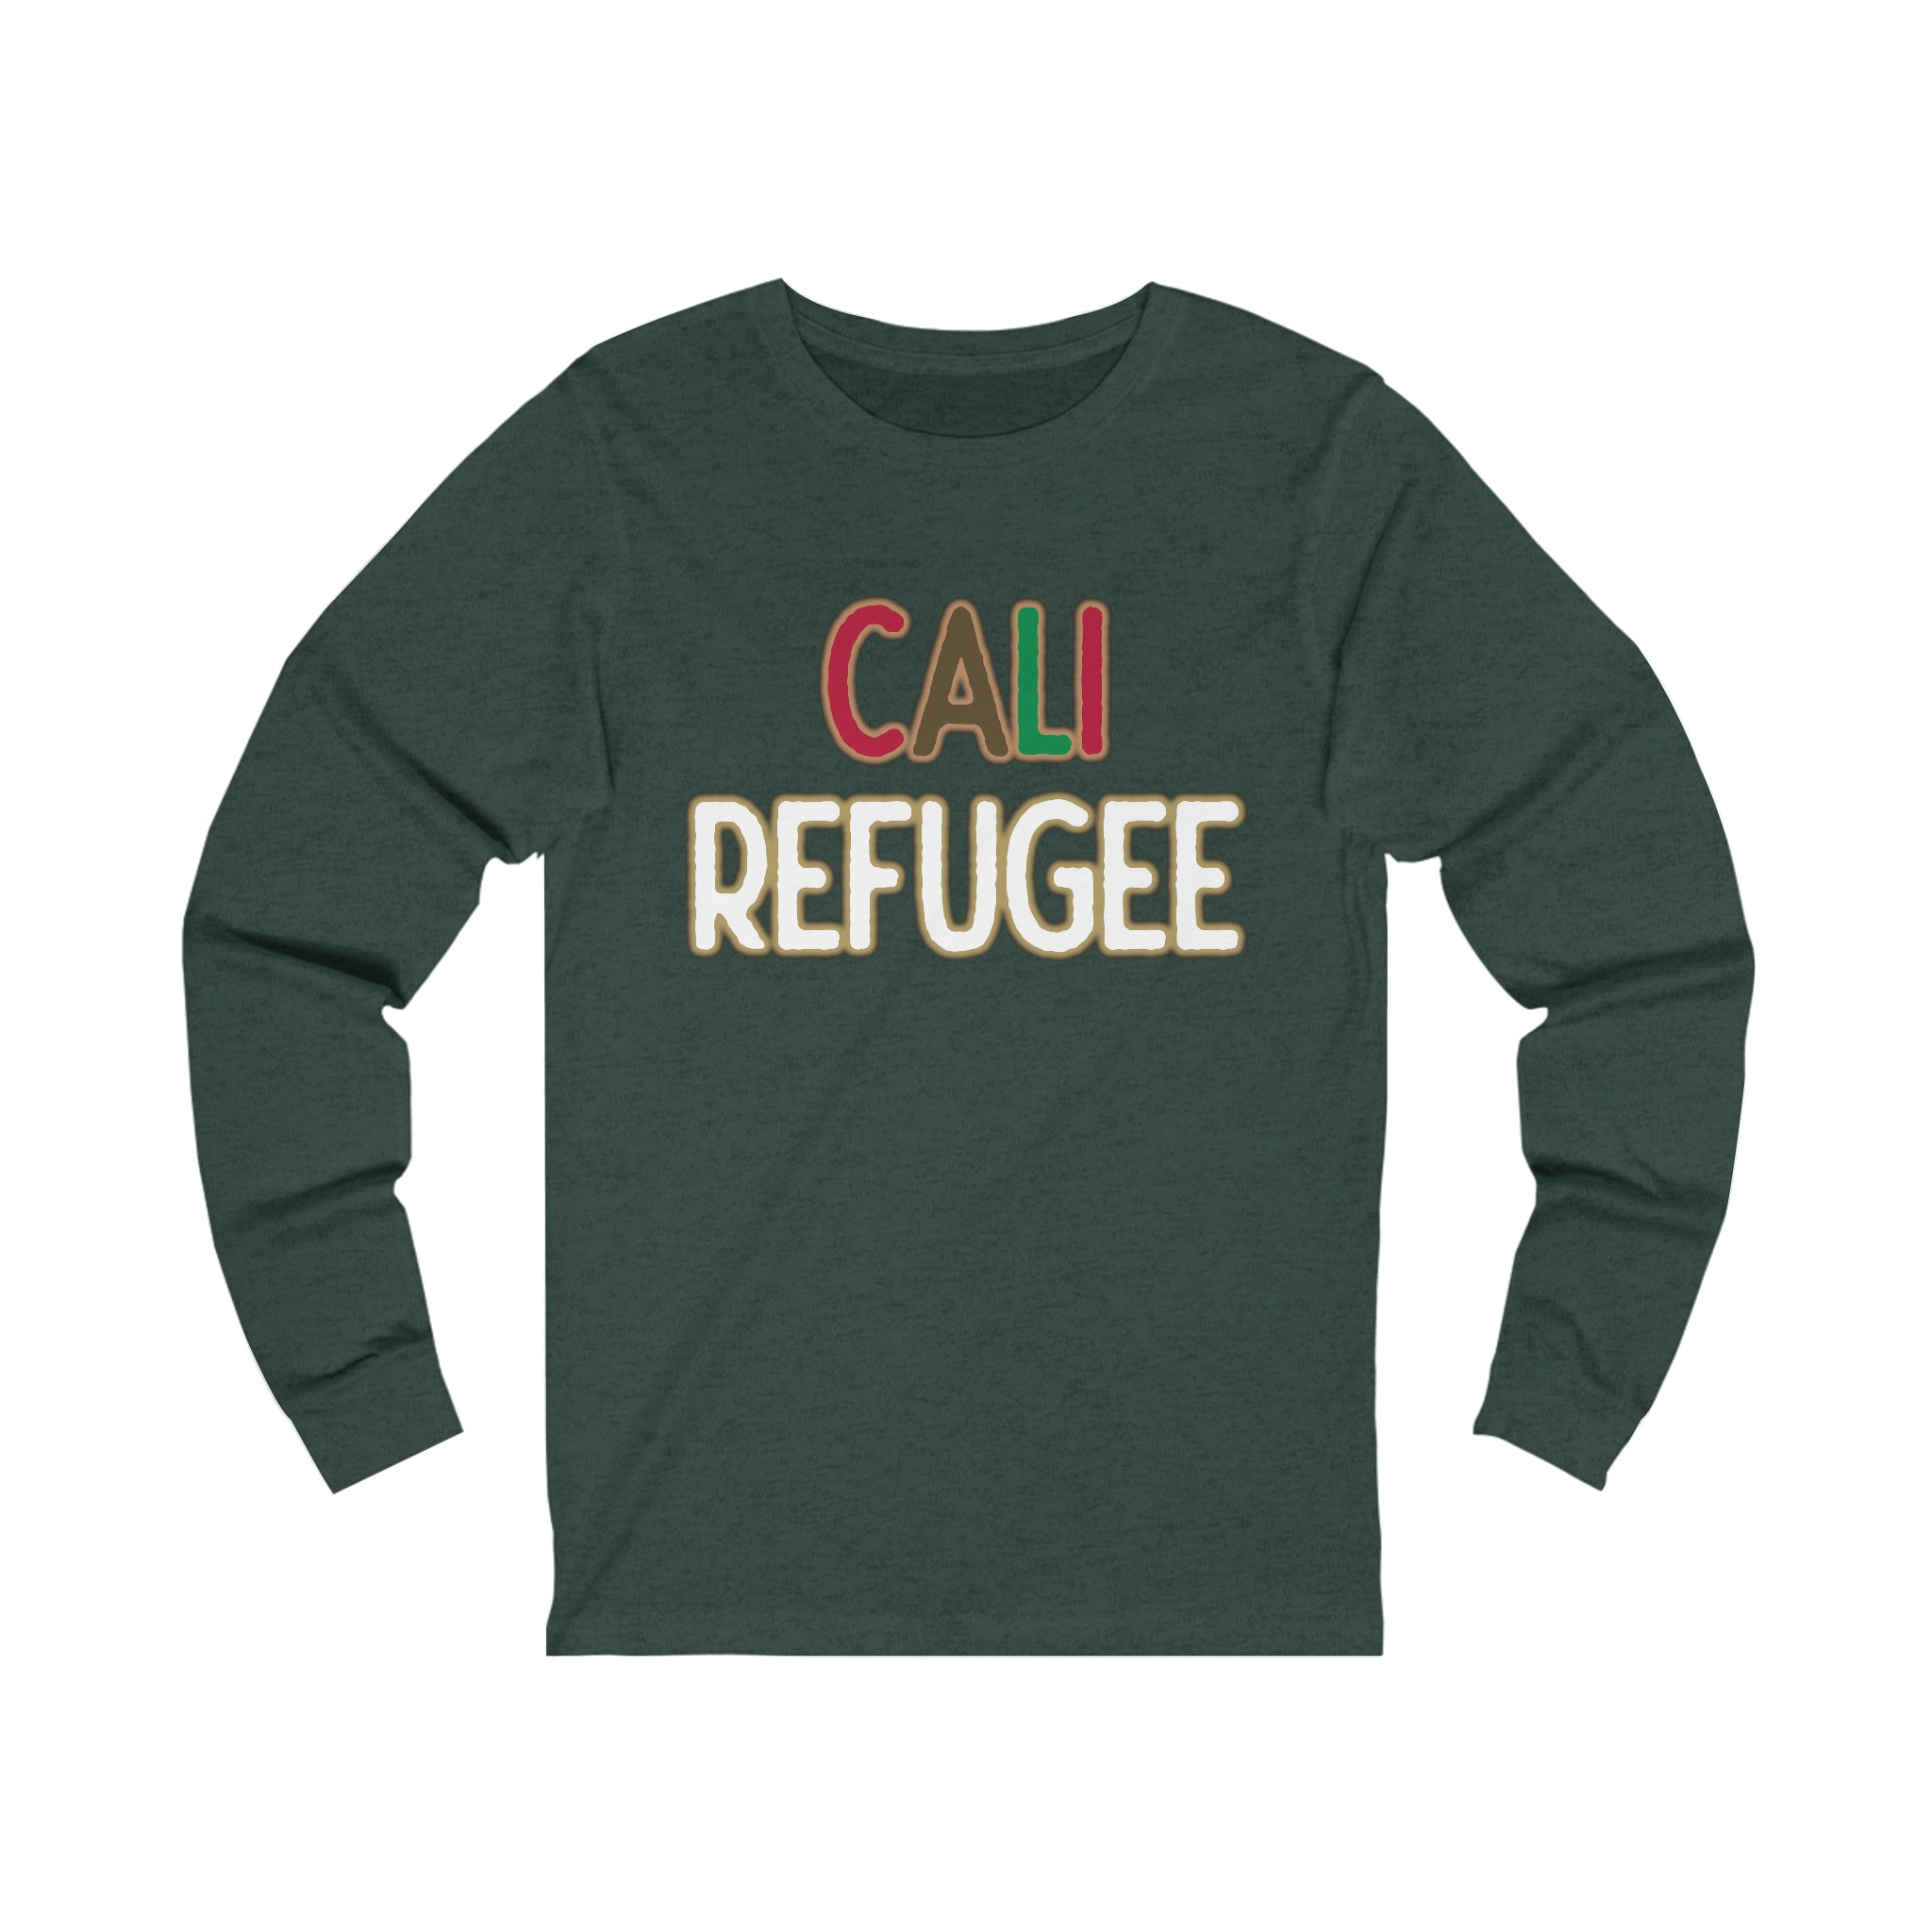 Cali Refugee Long Sleeve